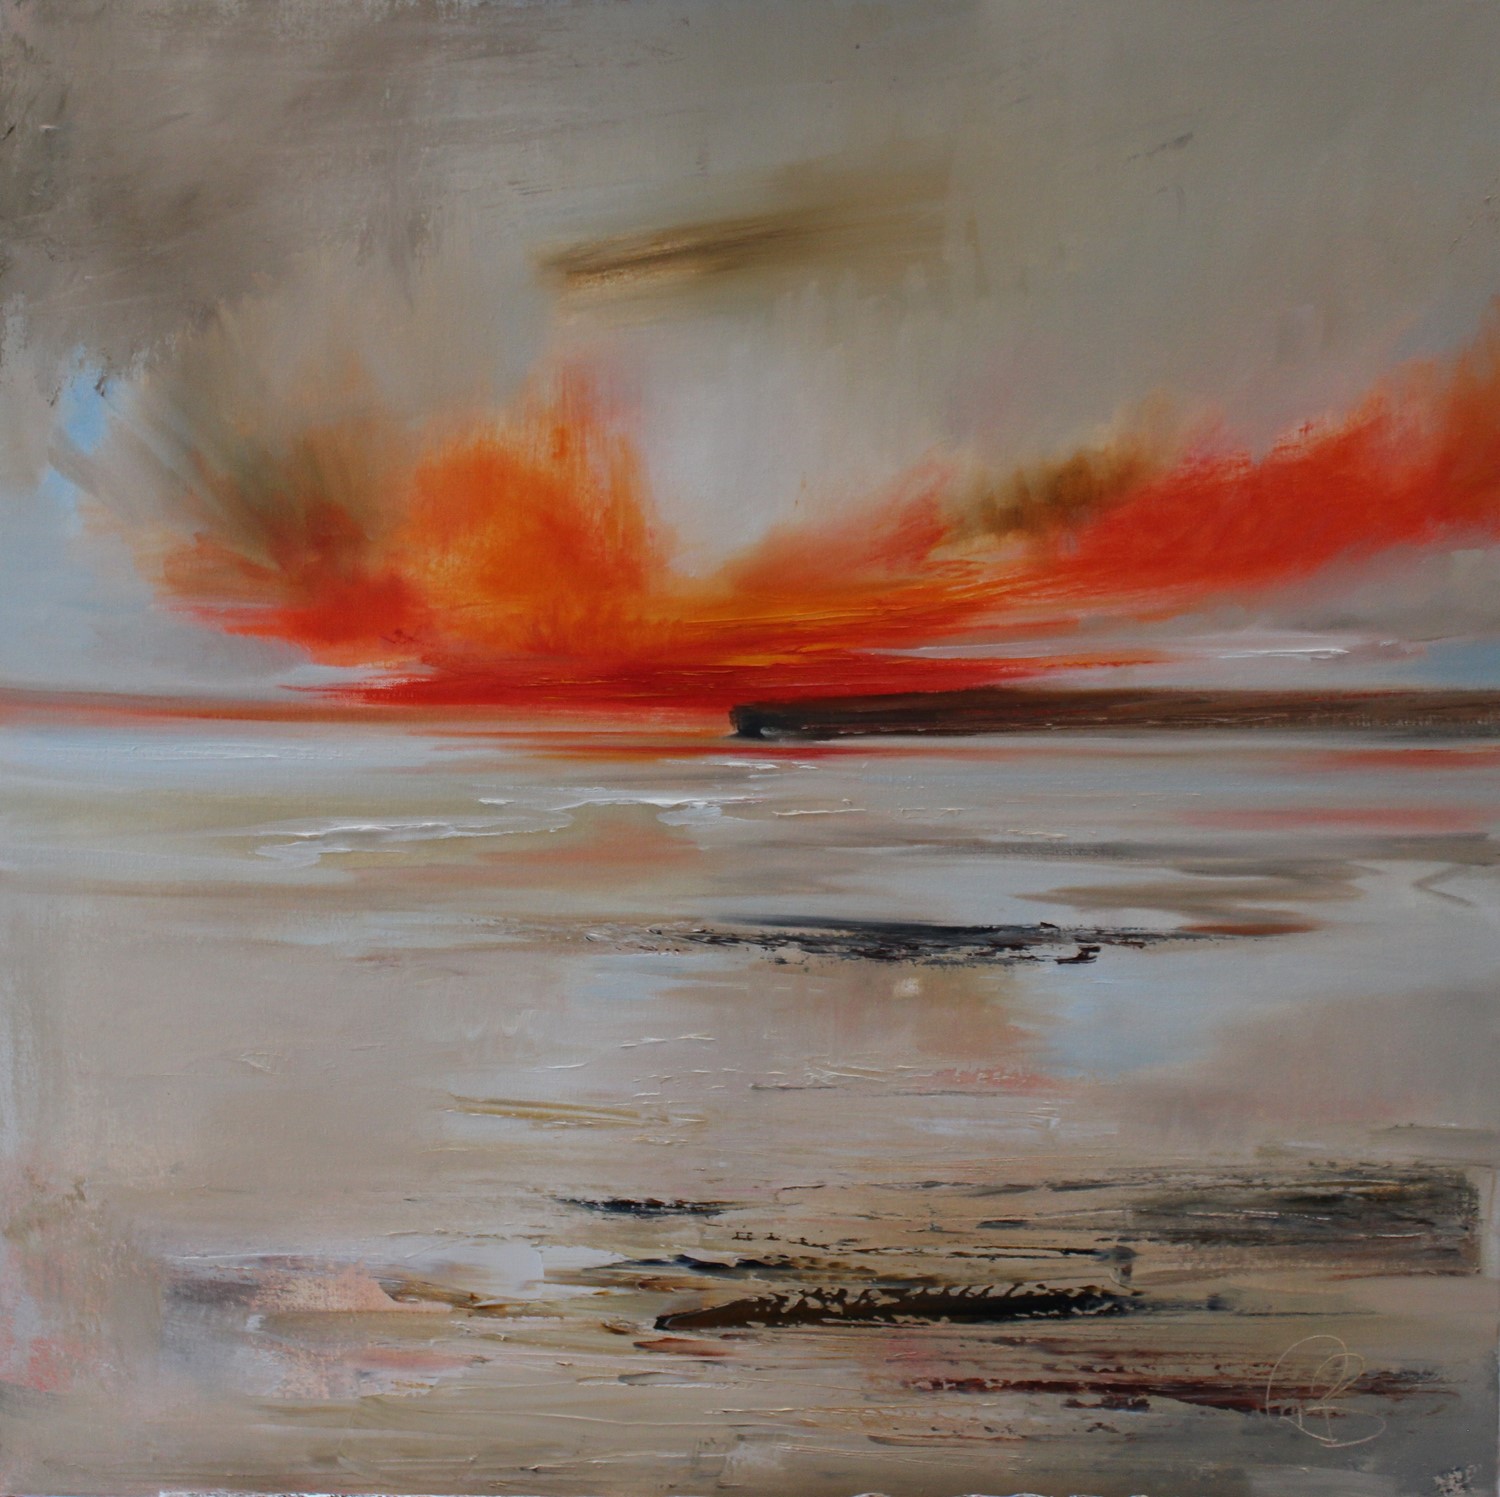 'A Flame Across the Horizon' by artist Rosanne Barr